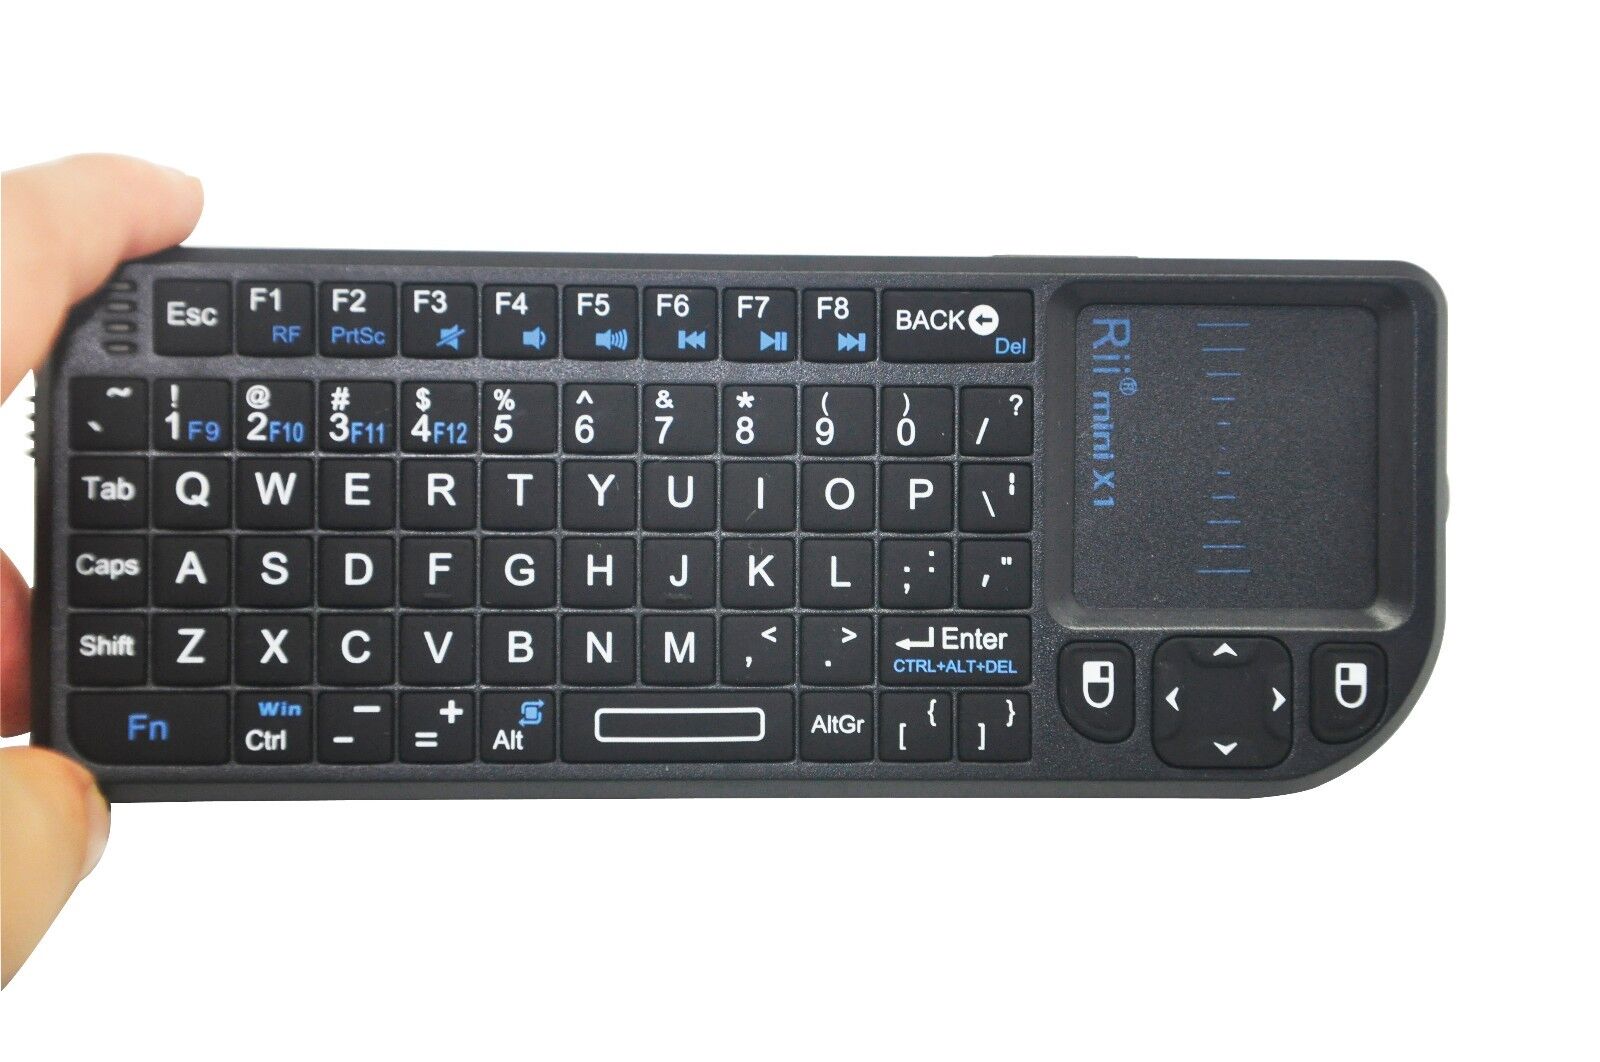  Rii Mini X1 2.4G Wireless Mini Keyboard with Touchpad for PC Smart TV